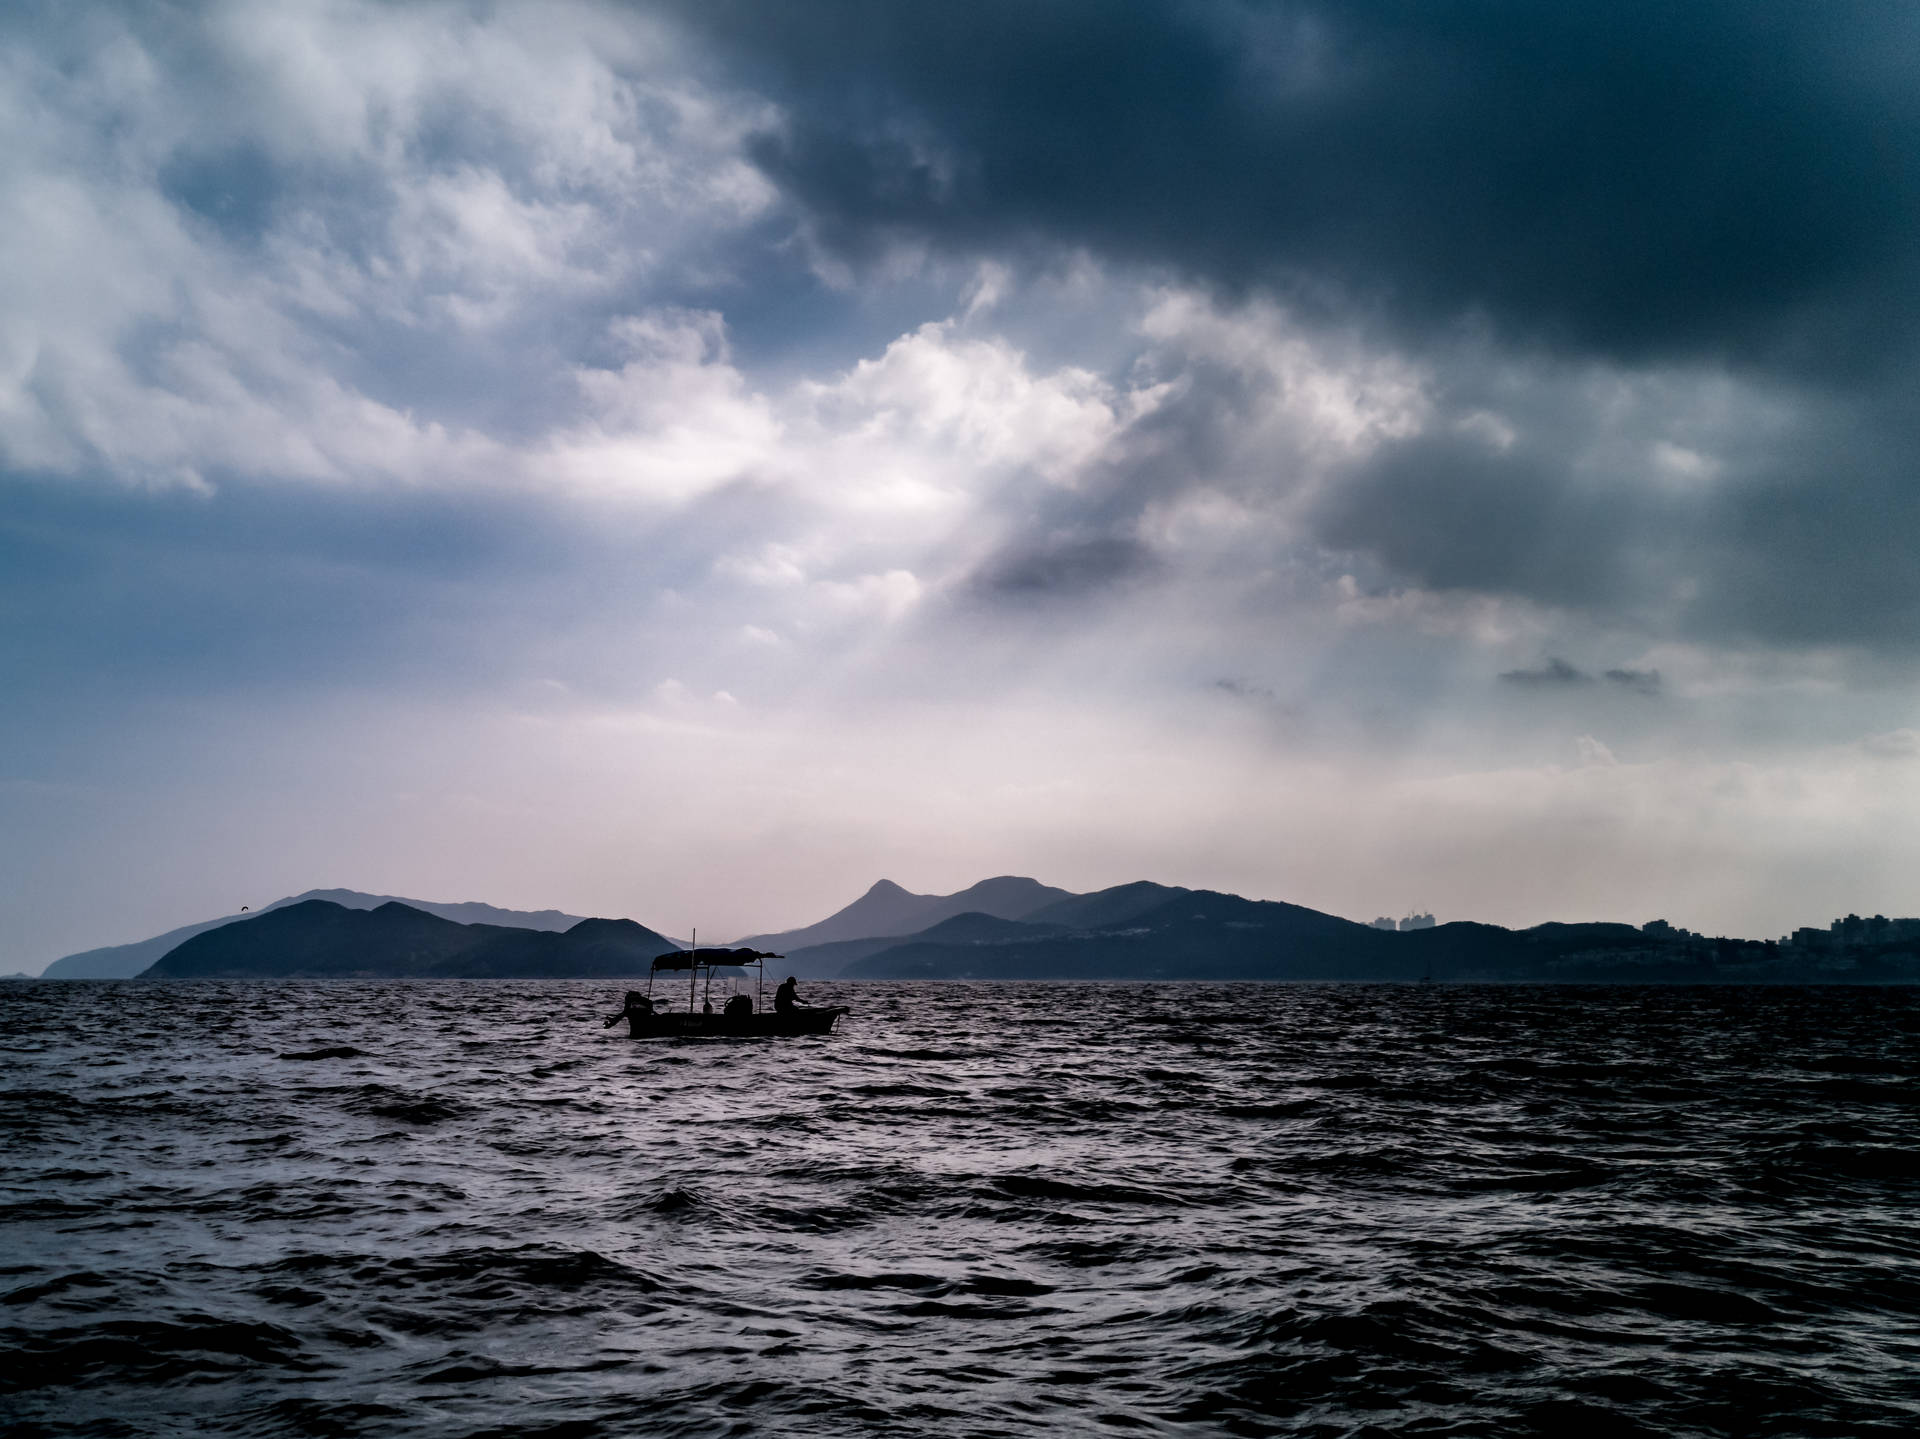 Boat Silhouette On Black Ocean Background